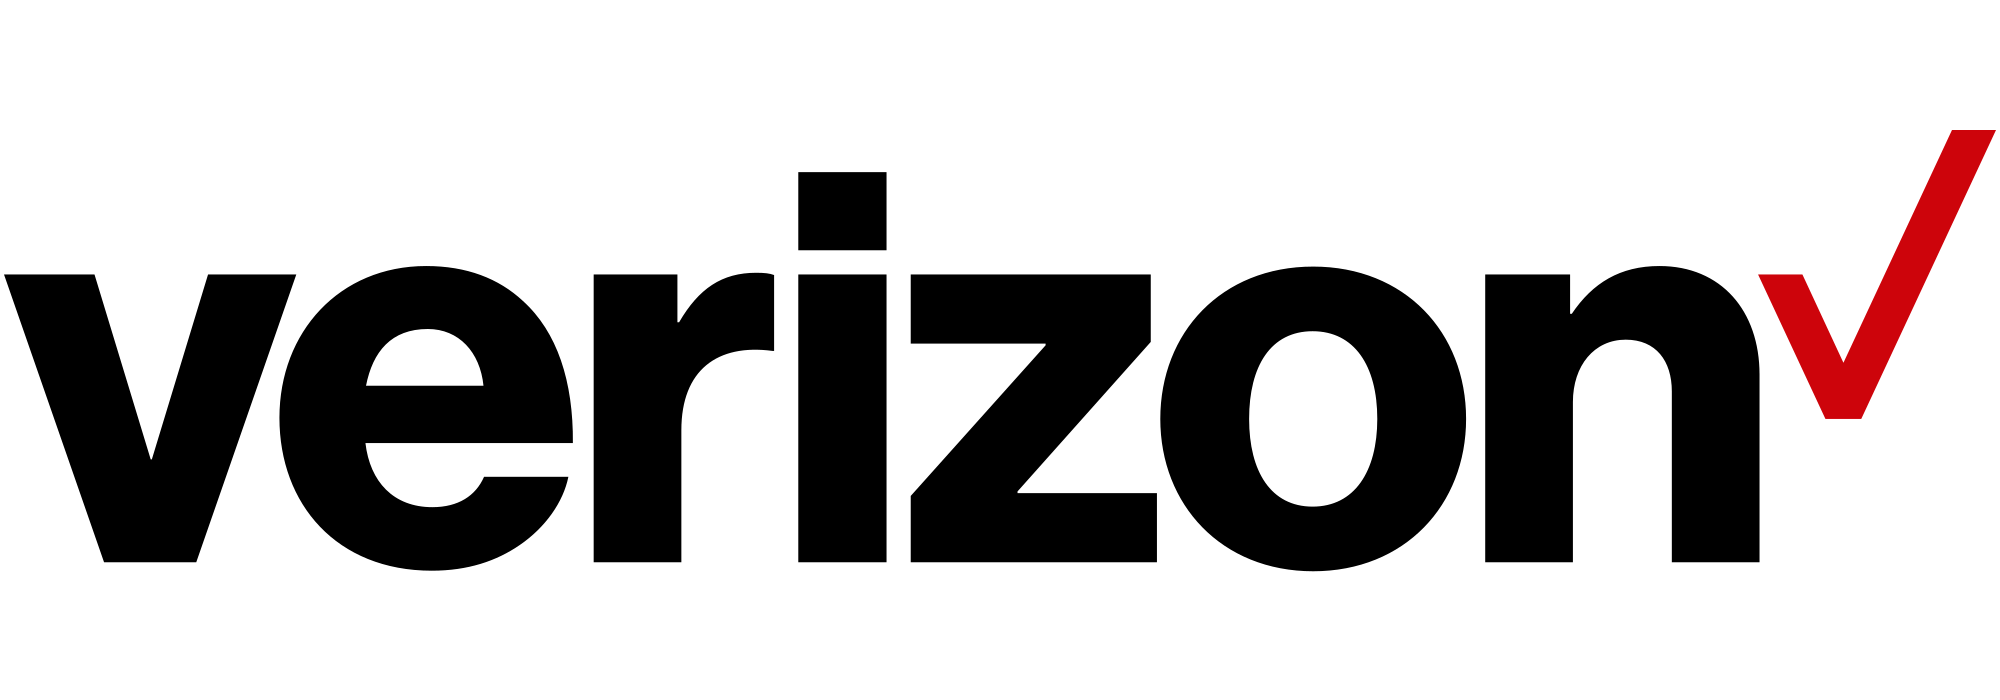 Verizon Logo PNG - 175775